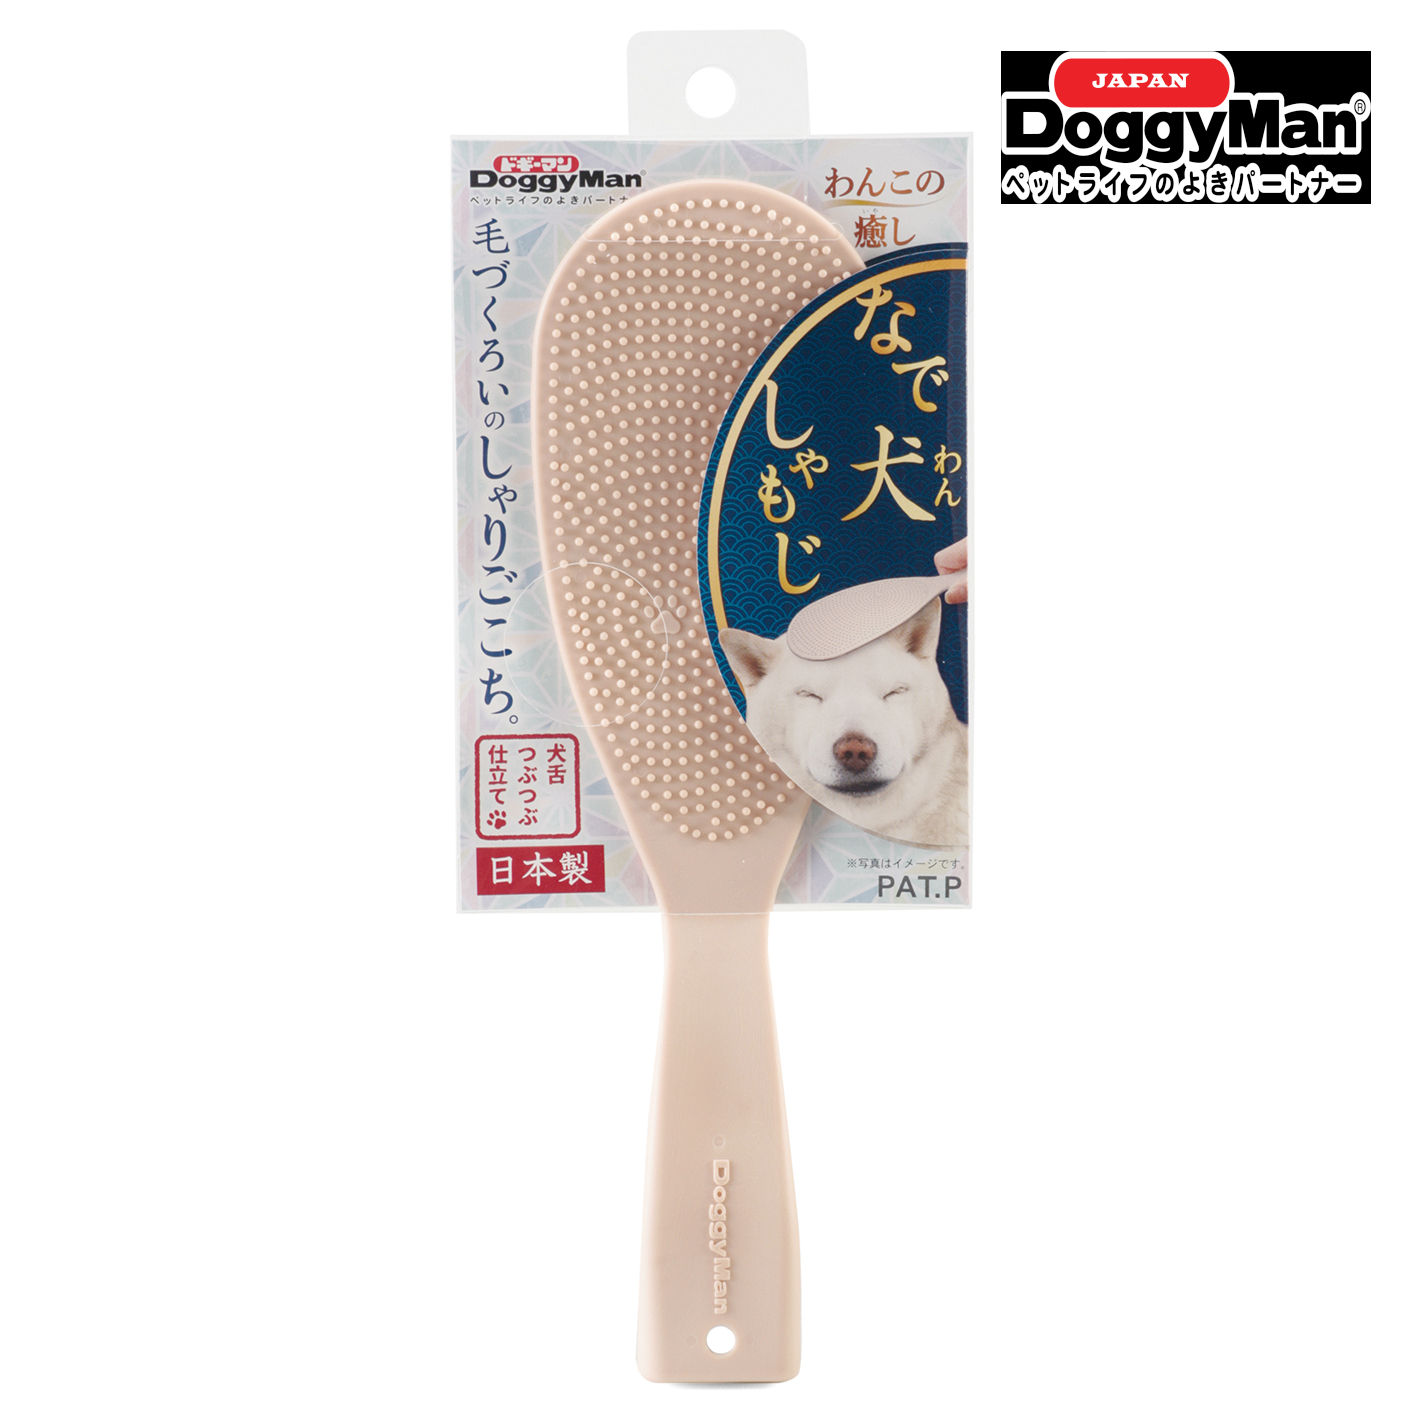 DoggyMan Rice Paddle-shaped Grooming Brush For Dog (83088)